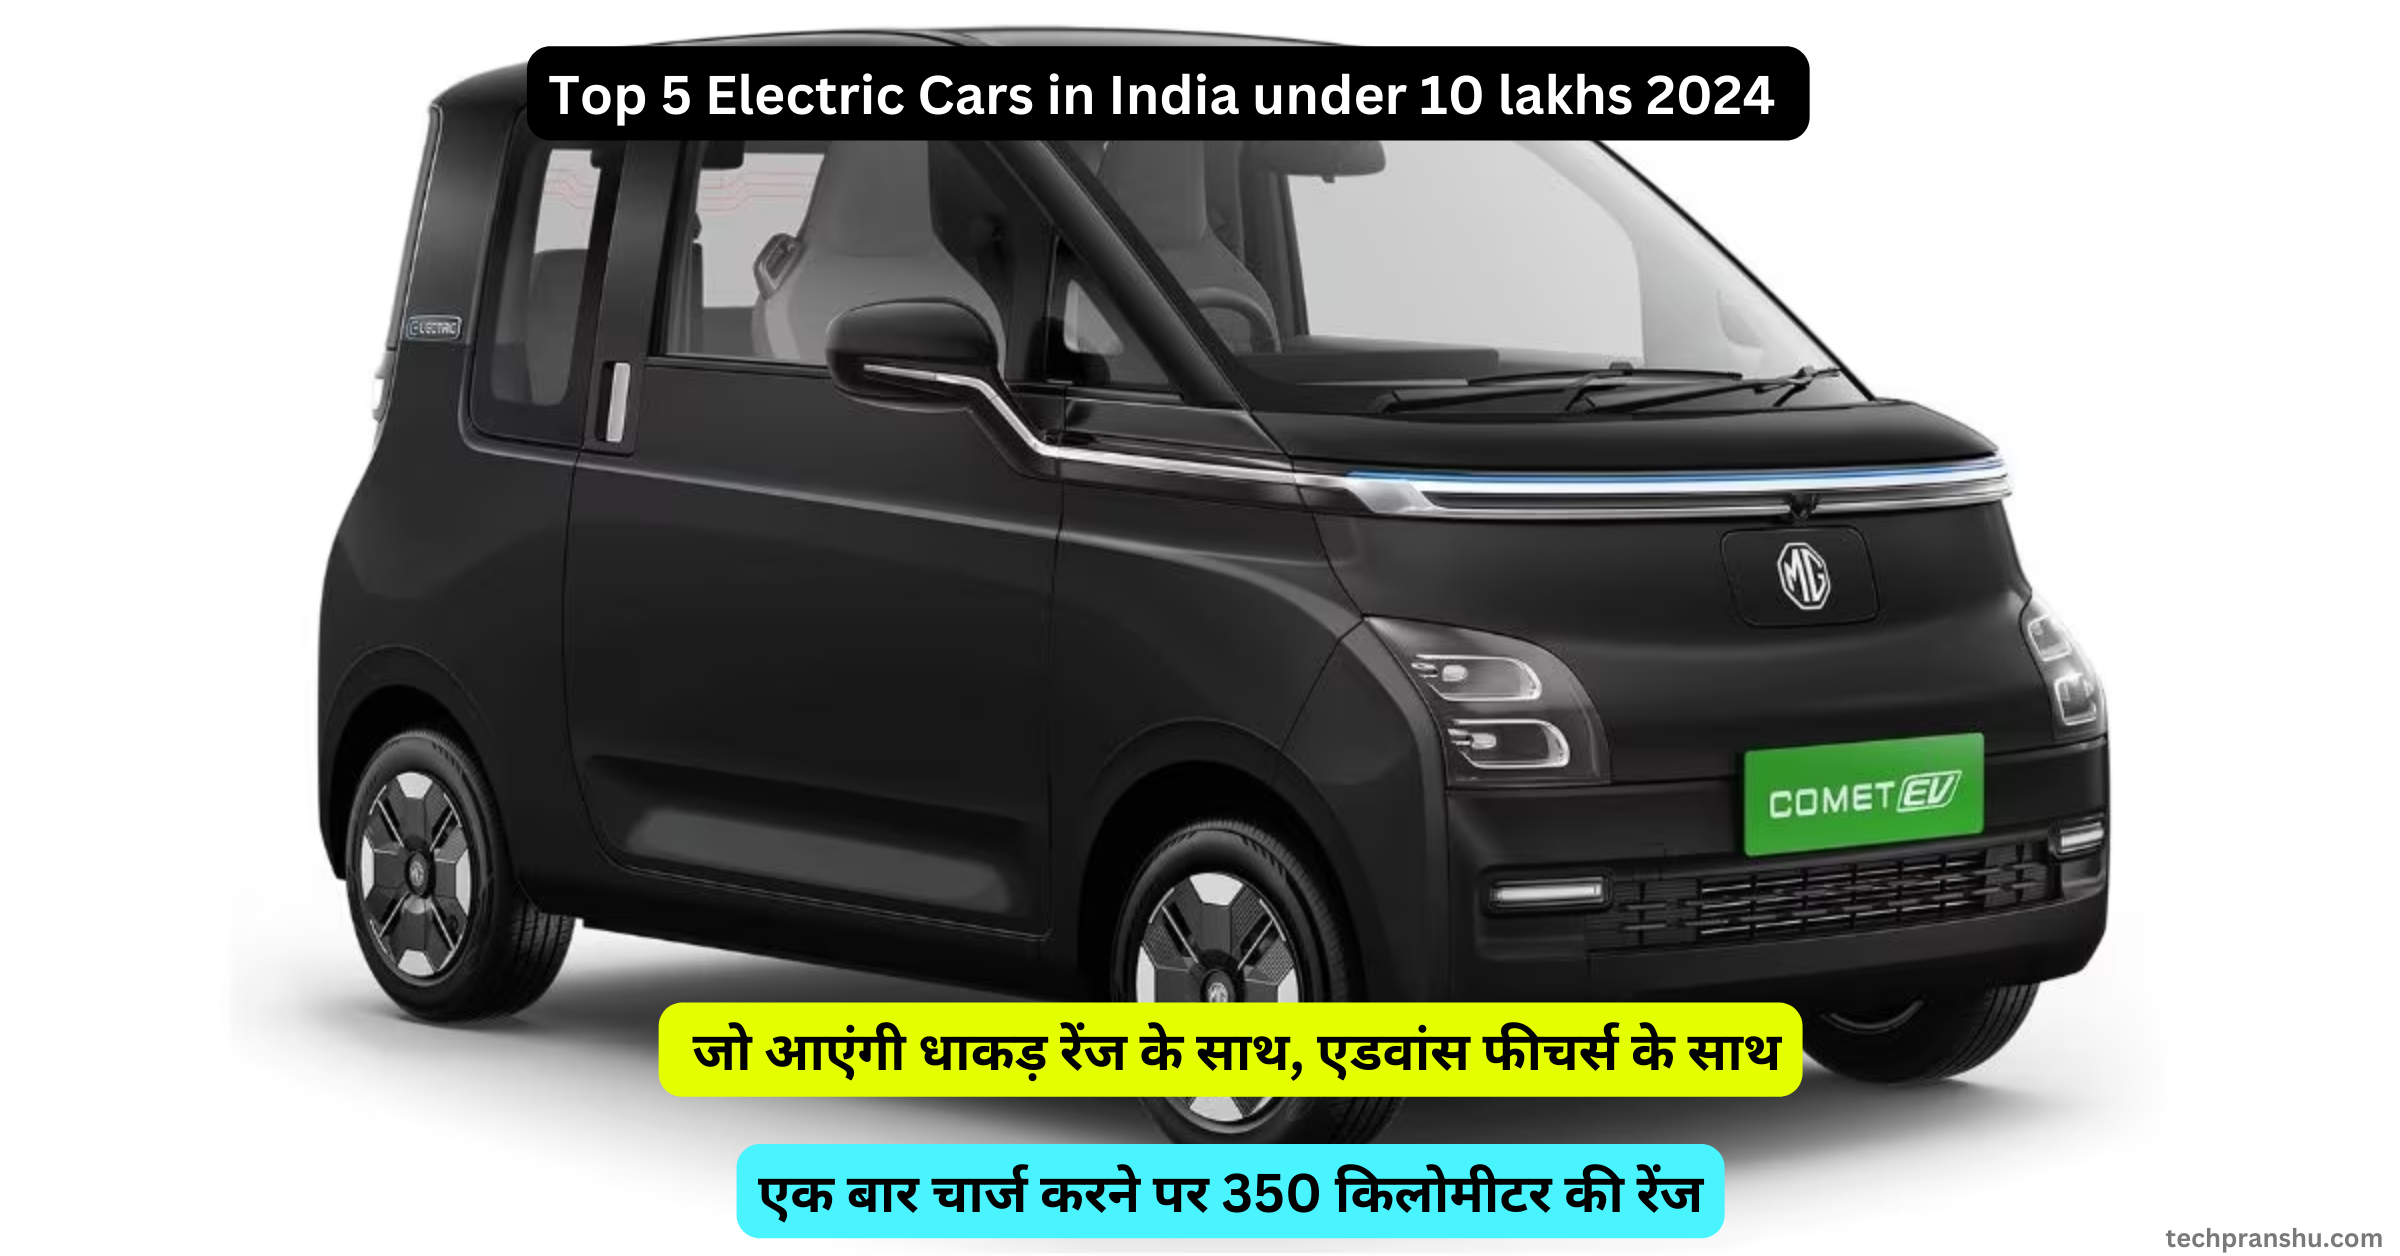 Top 5 Electric Cars in India under 10 lakhs 2024 जो आएंगी धाकड़ रेंज